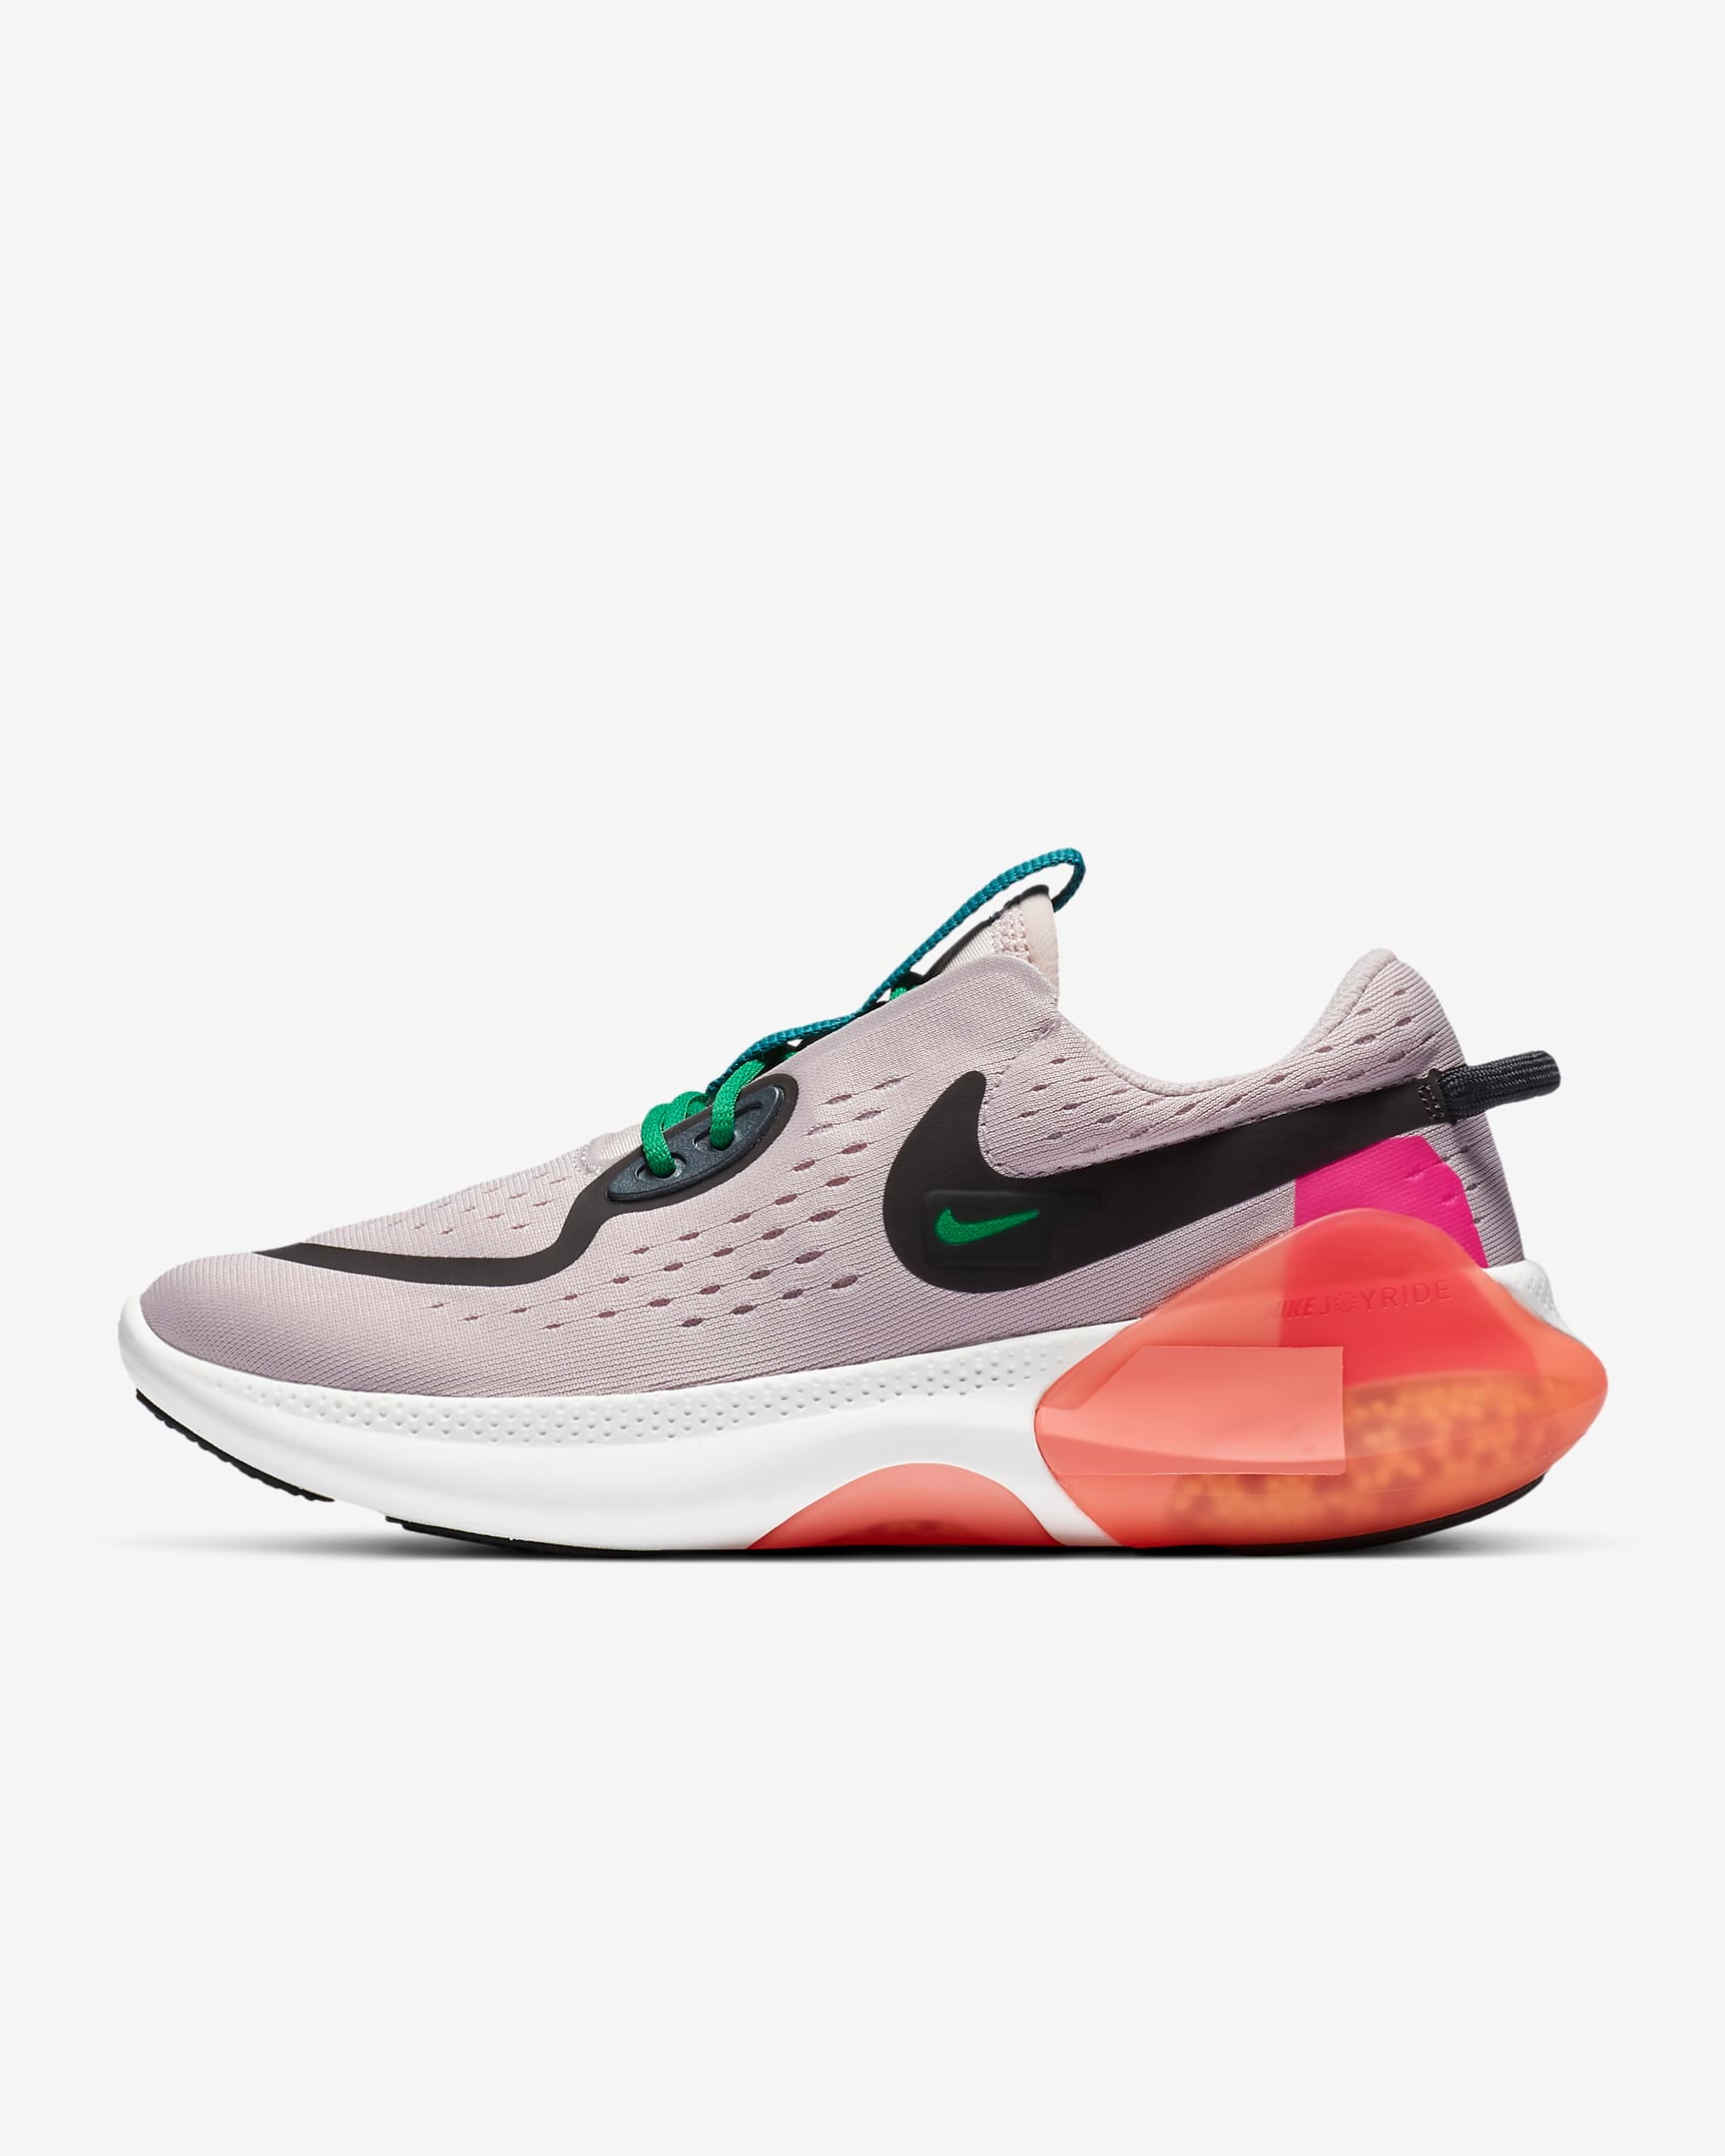 Nike + Joyride Dual Run Premium Running Shoe